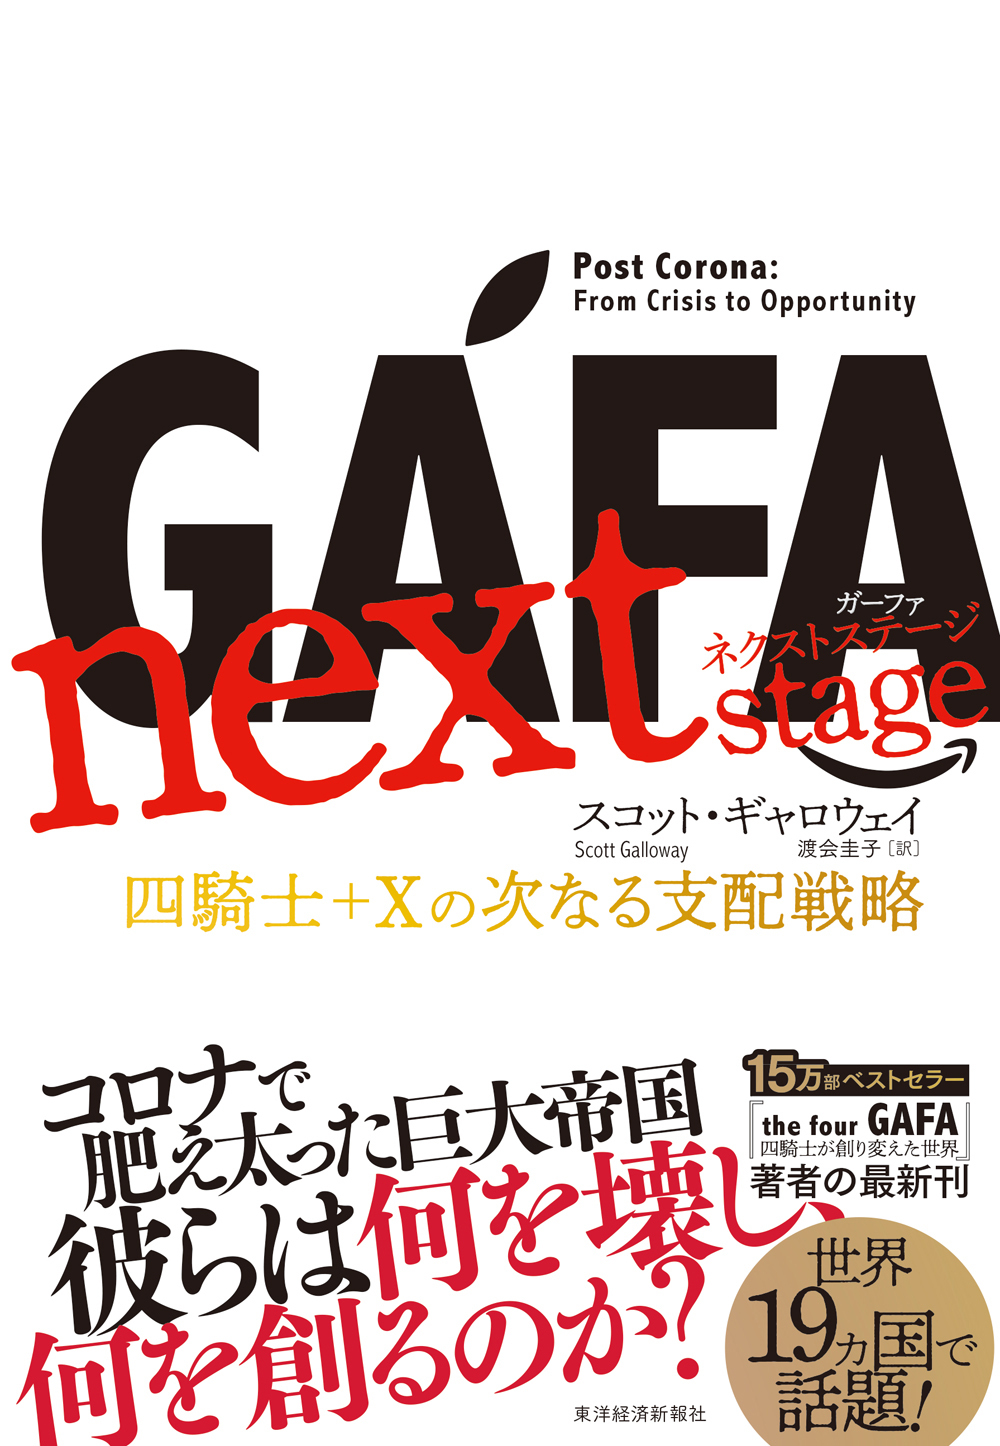 GAFA next stage ガーファ ネクストステージ